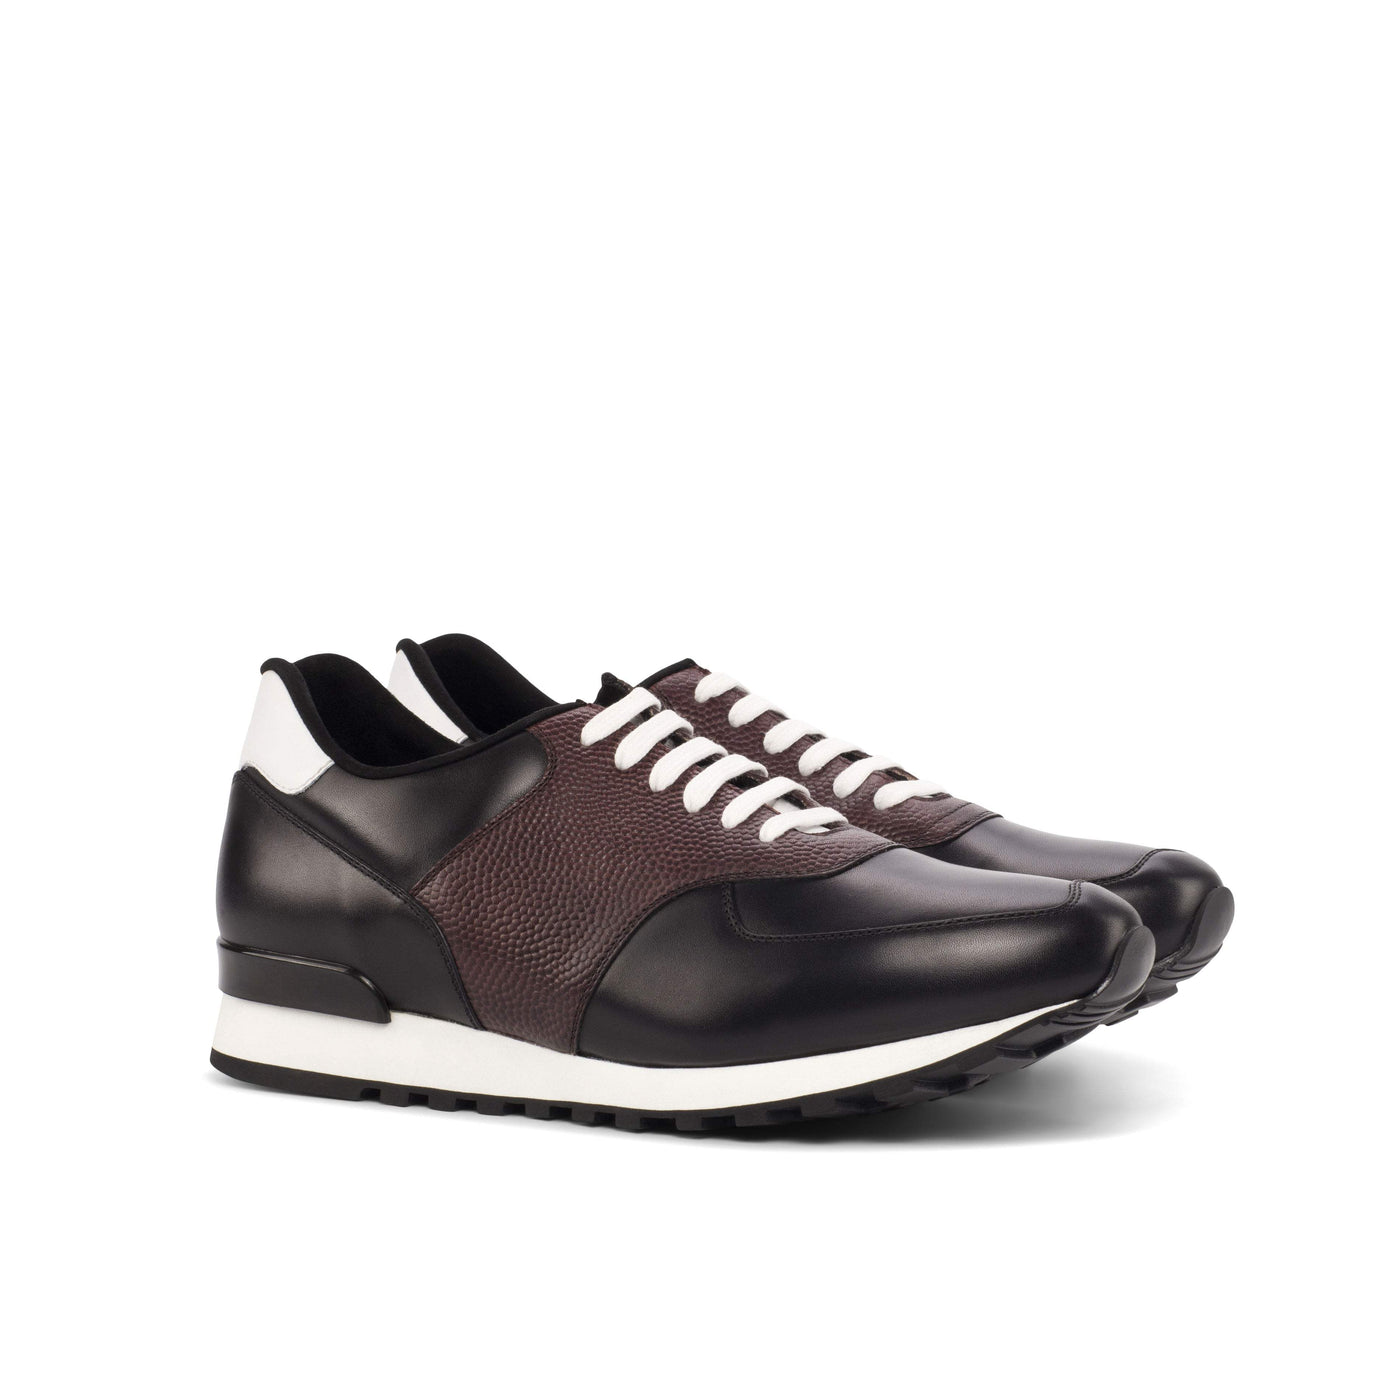 Men's Jogger Sneakers Leather Black White 4480 3- MERRIMIUM